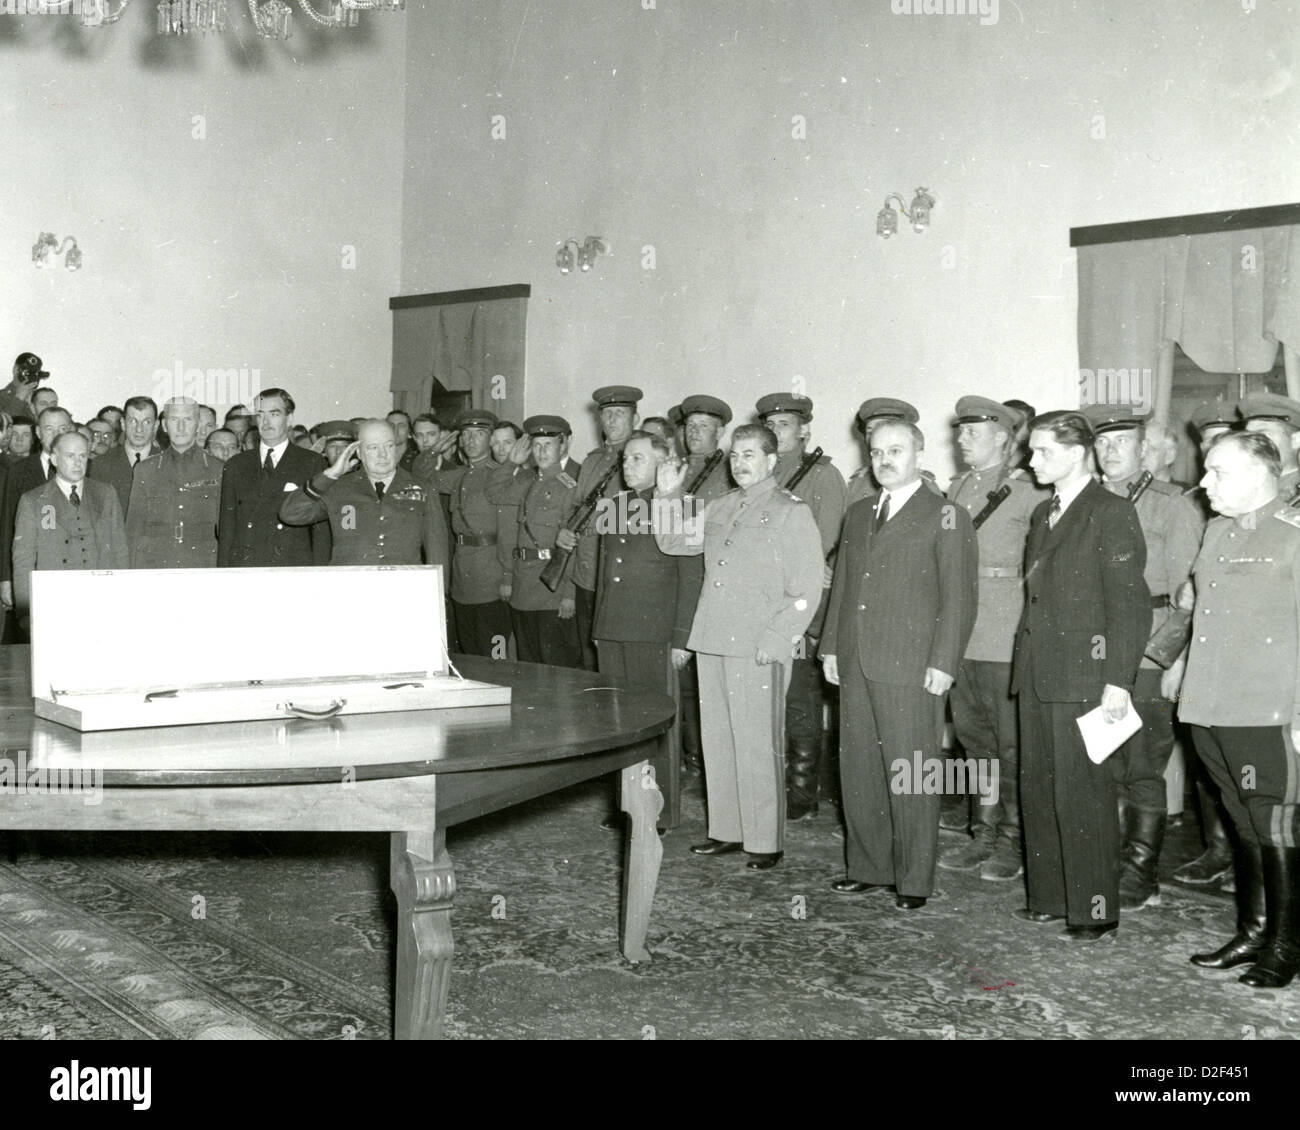 WINSTON CHURCHILL and Joseph Stalin at presentation of the Sword of Stalingrad during Tehran Conference 29 November 1943. Stock Photo